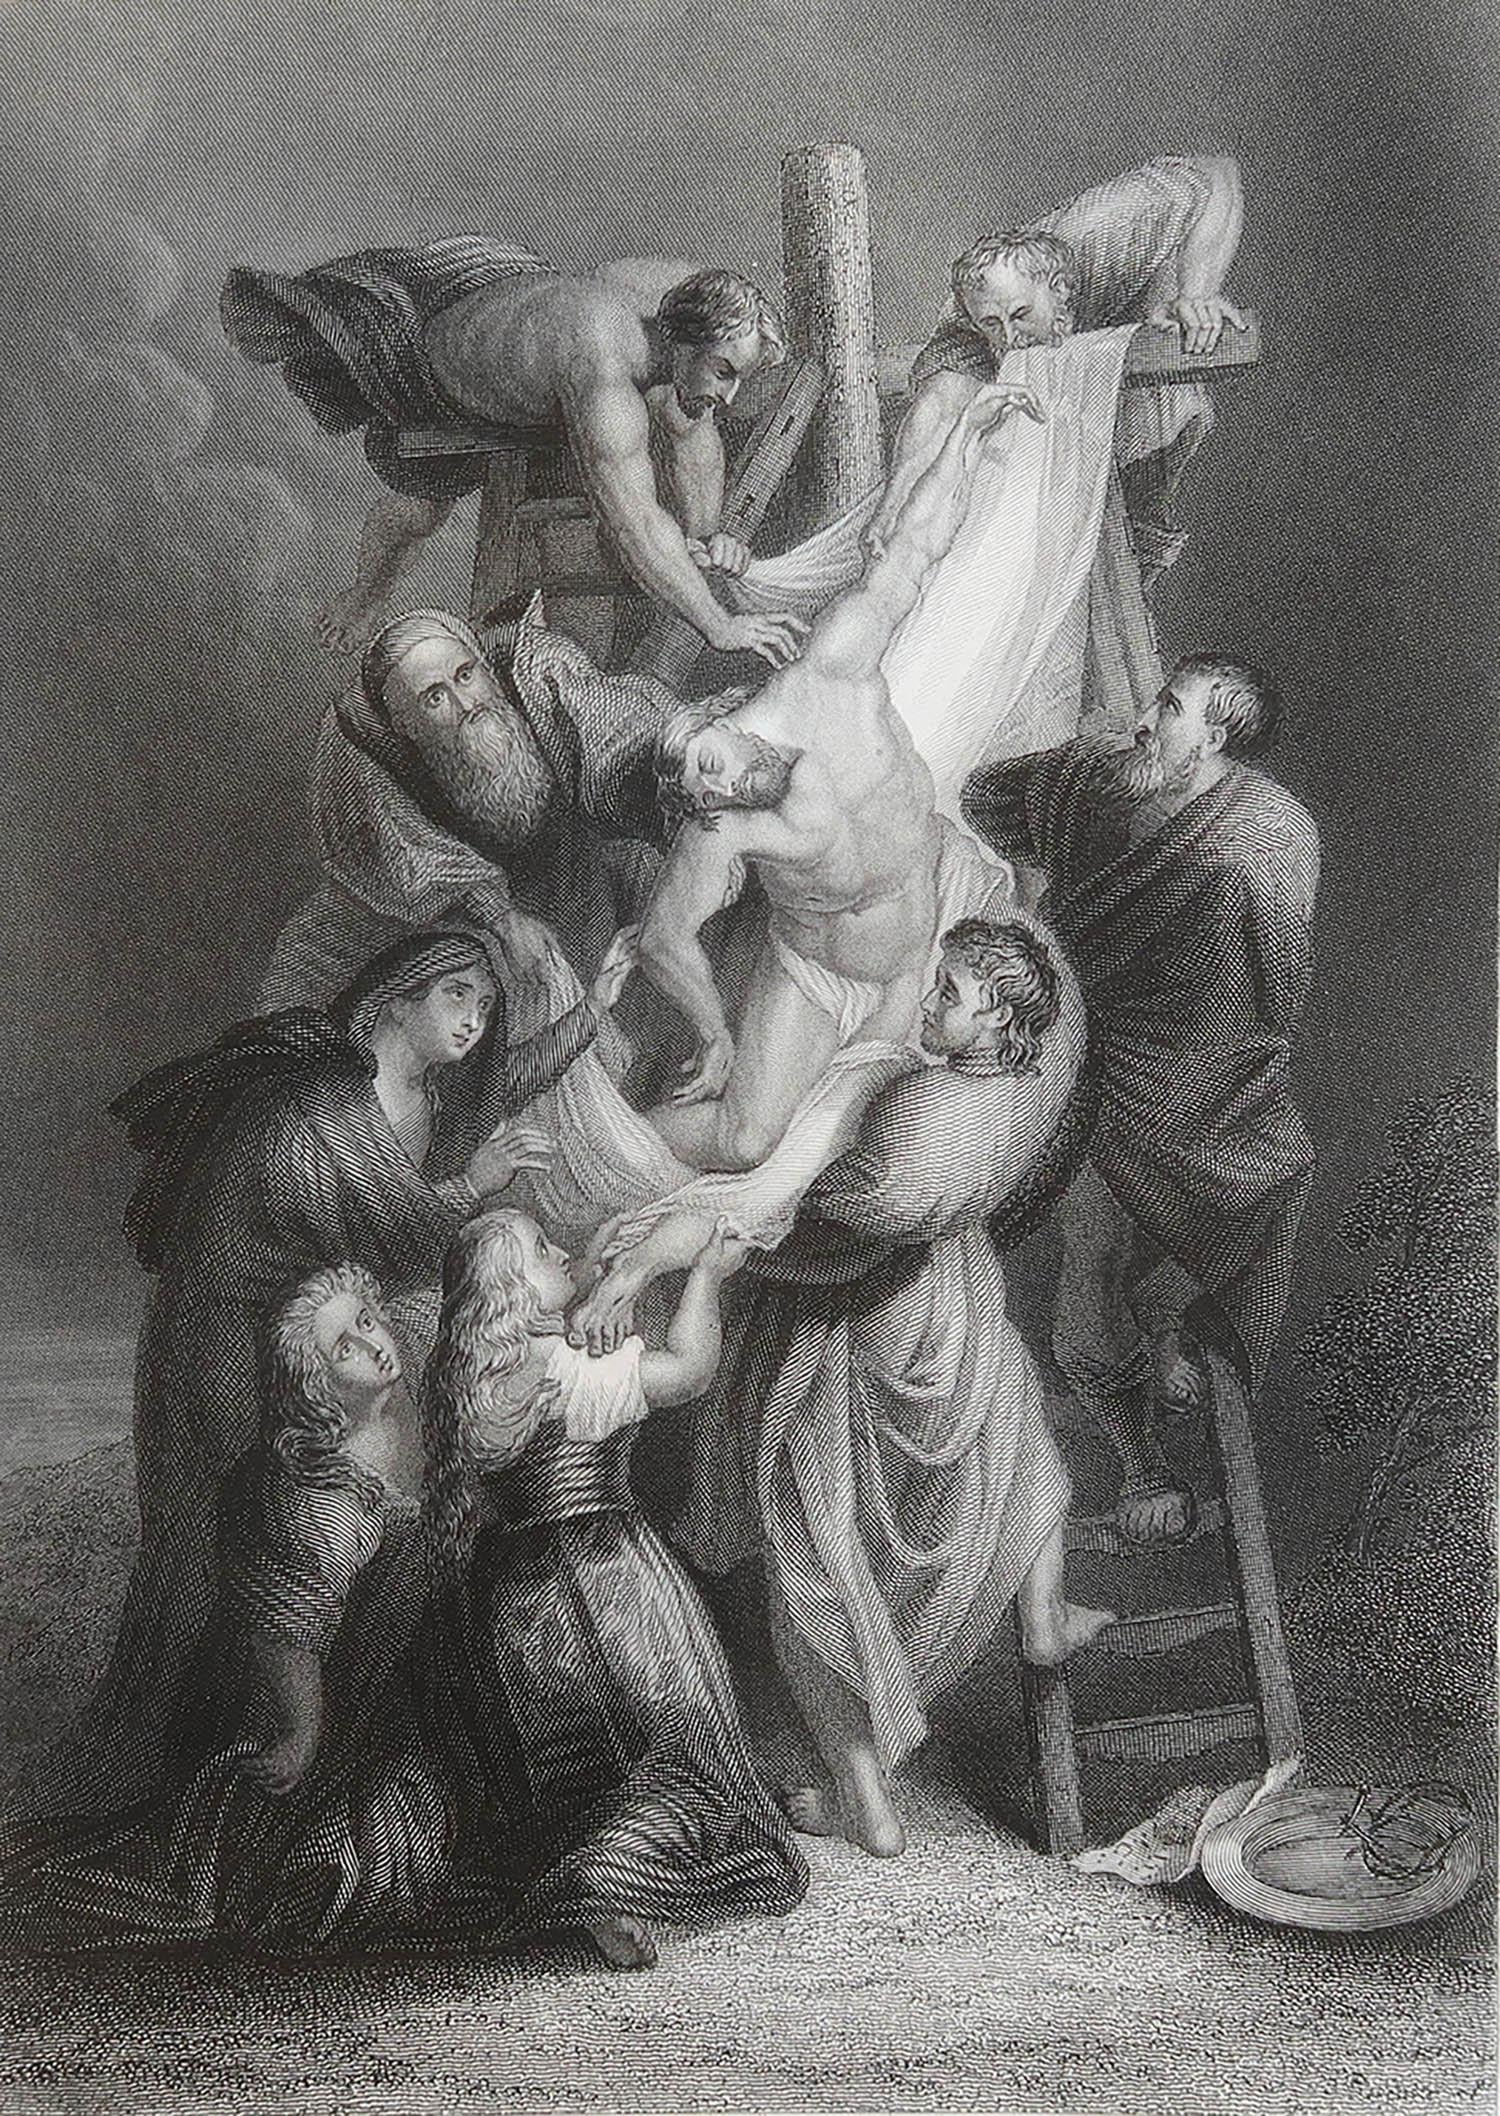 Wonderful image after Rubens

Fine steel engraving. 

Published by Sangster, C.1850

Unframed.

